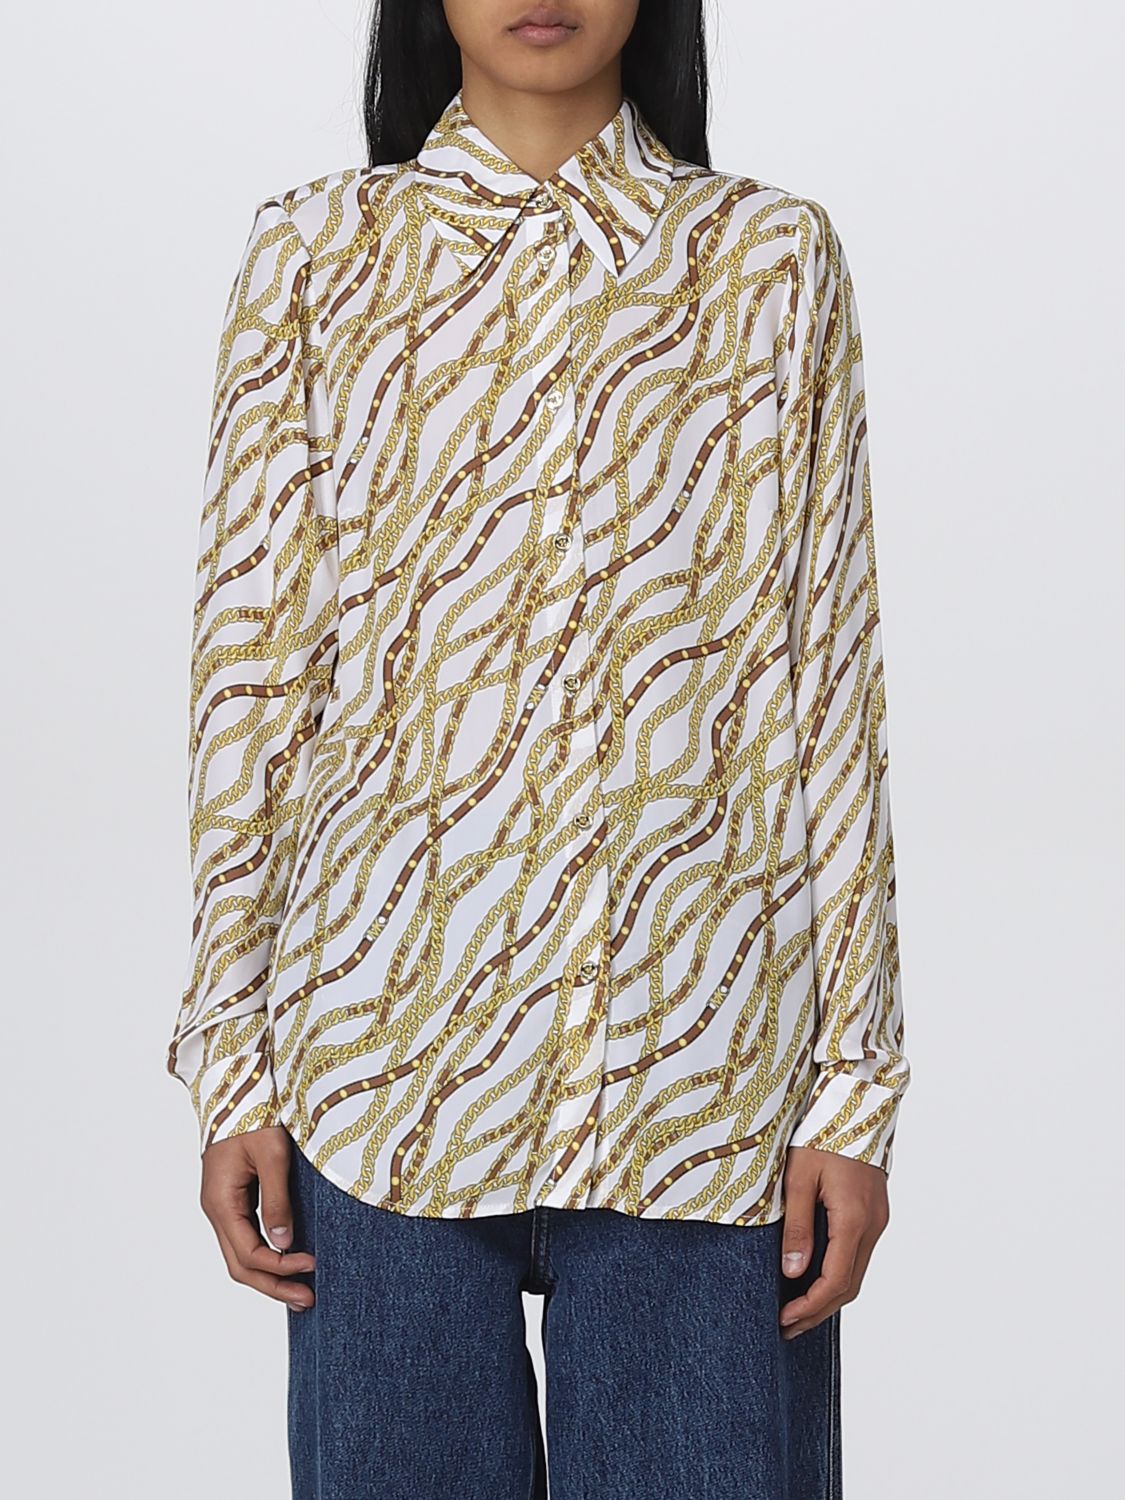 MICHAEL KORS: shirt for women - White | Michael Kors shirt MS340A68EE  online on 